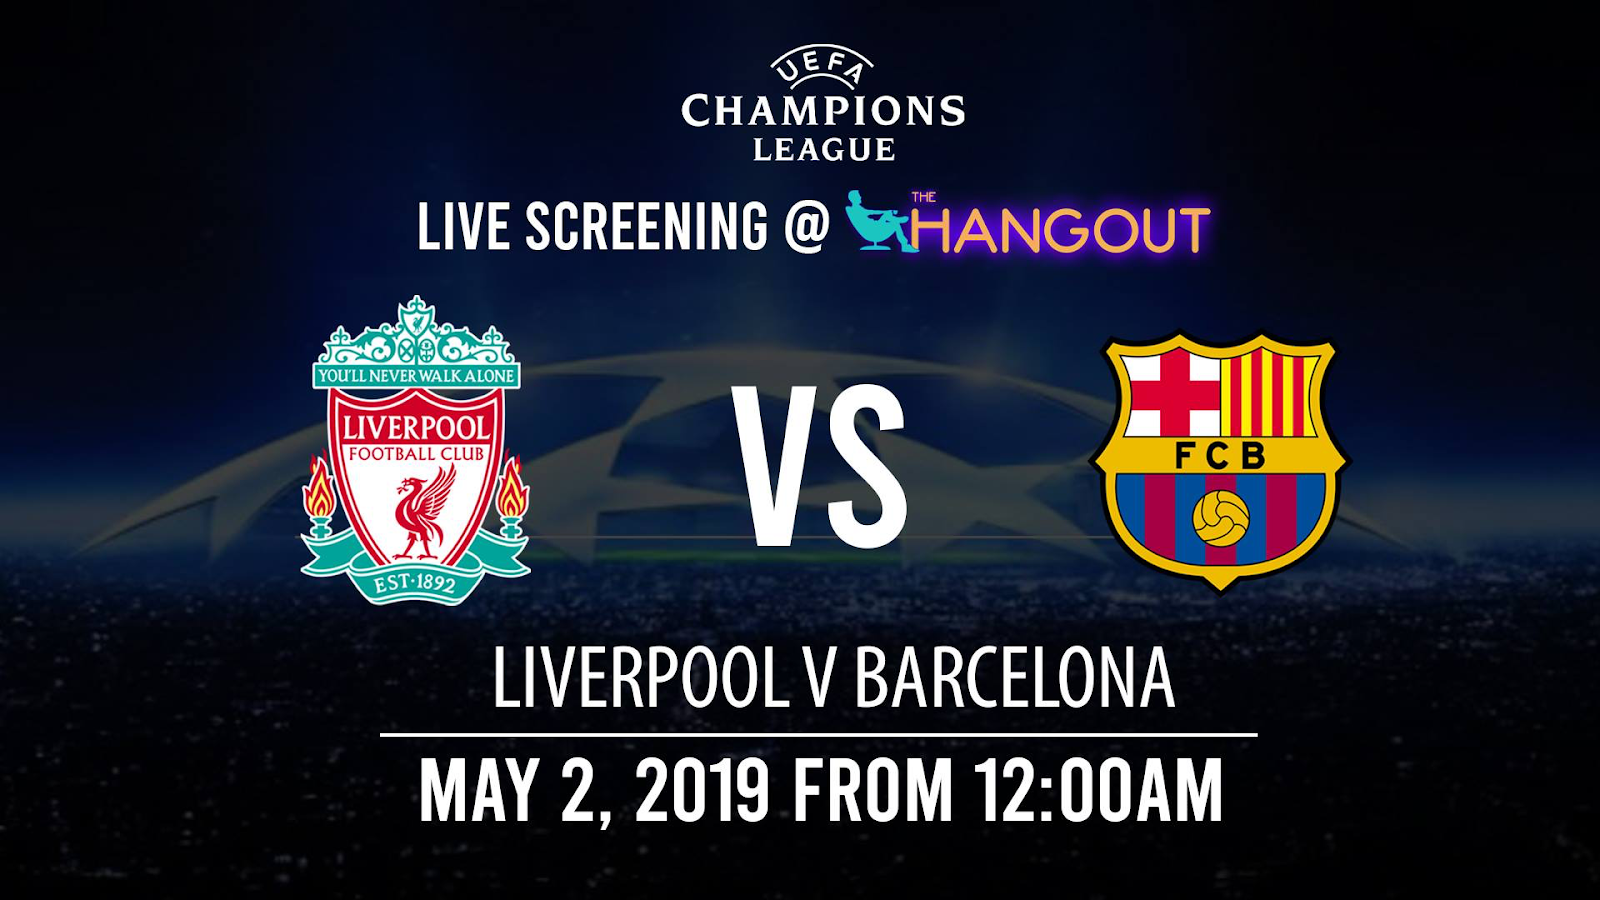 the hangout Liverpool vs Barcelona live screening